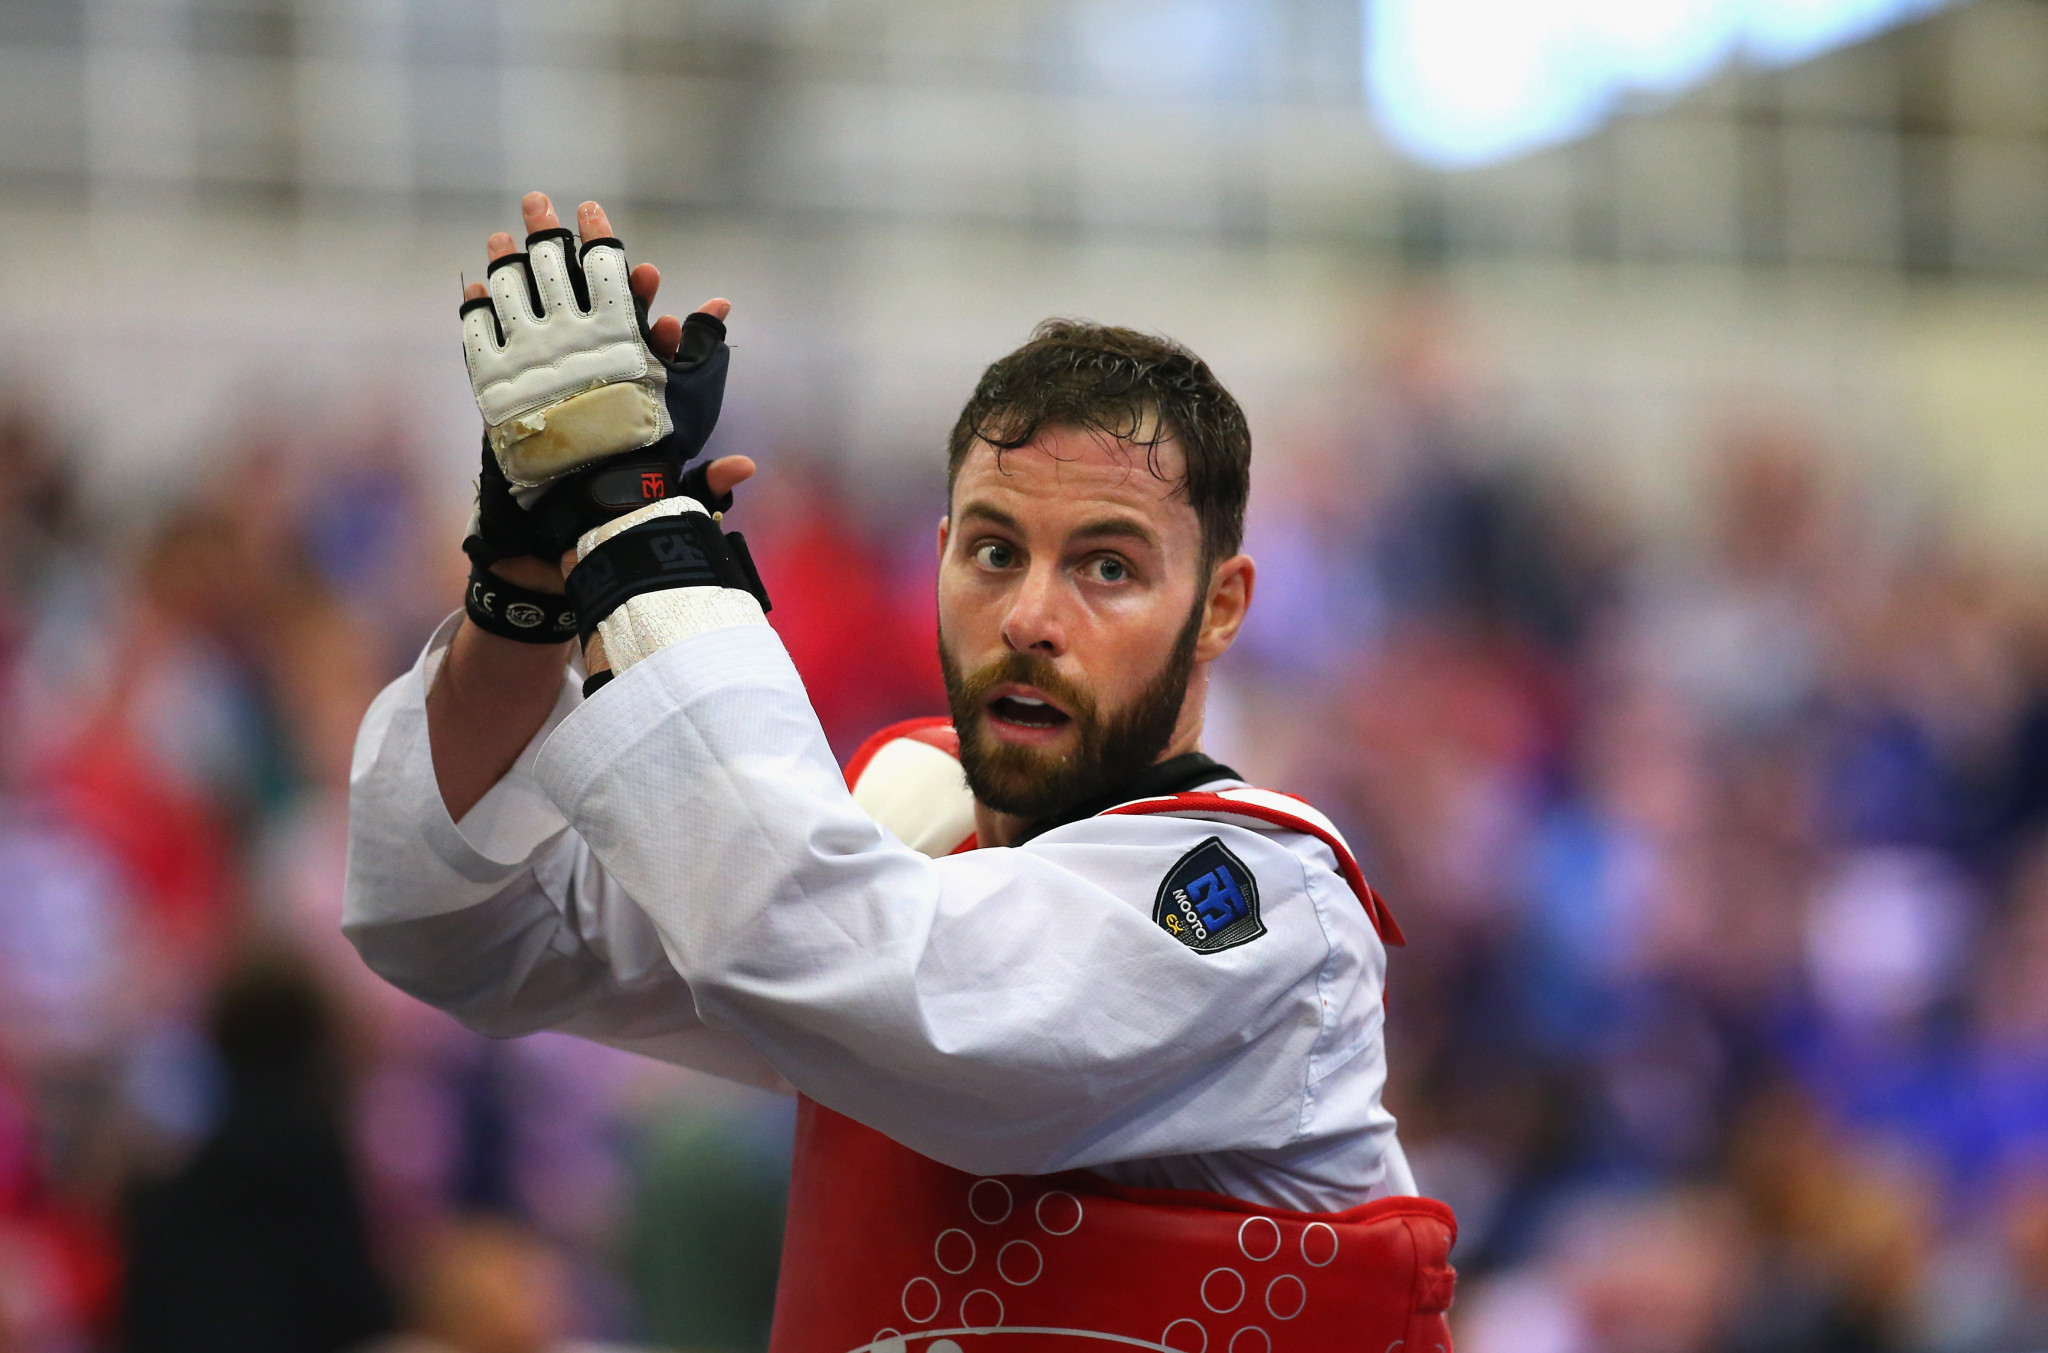 British two-time taekwondo world medallist Samsun retires